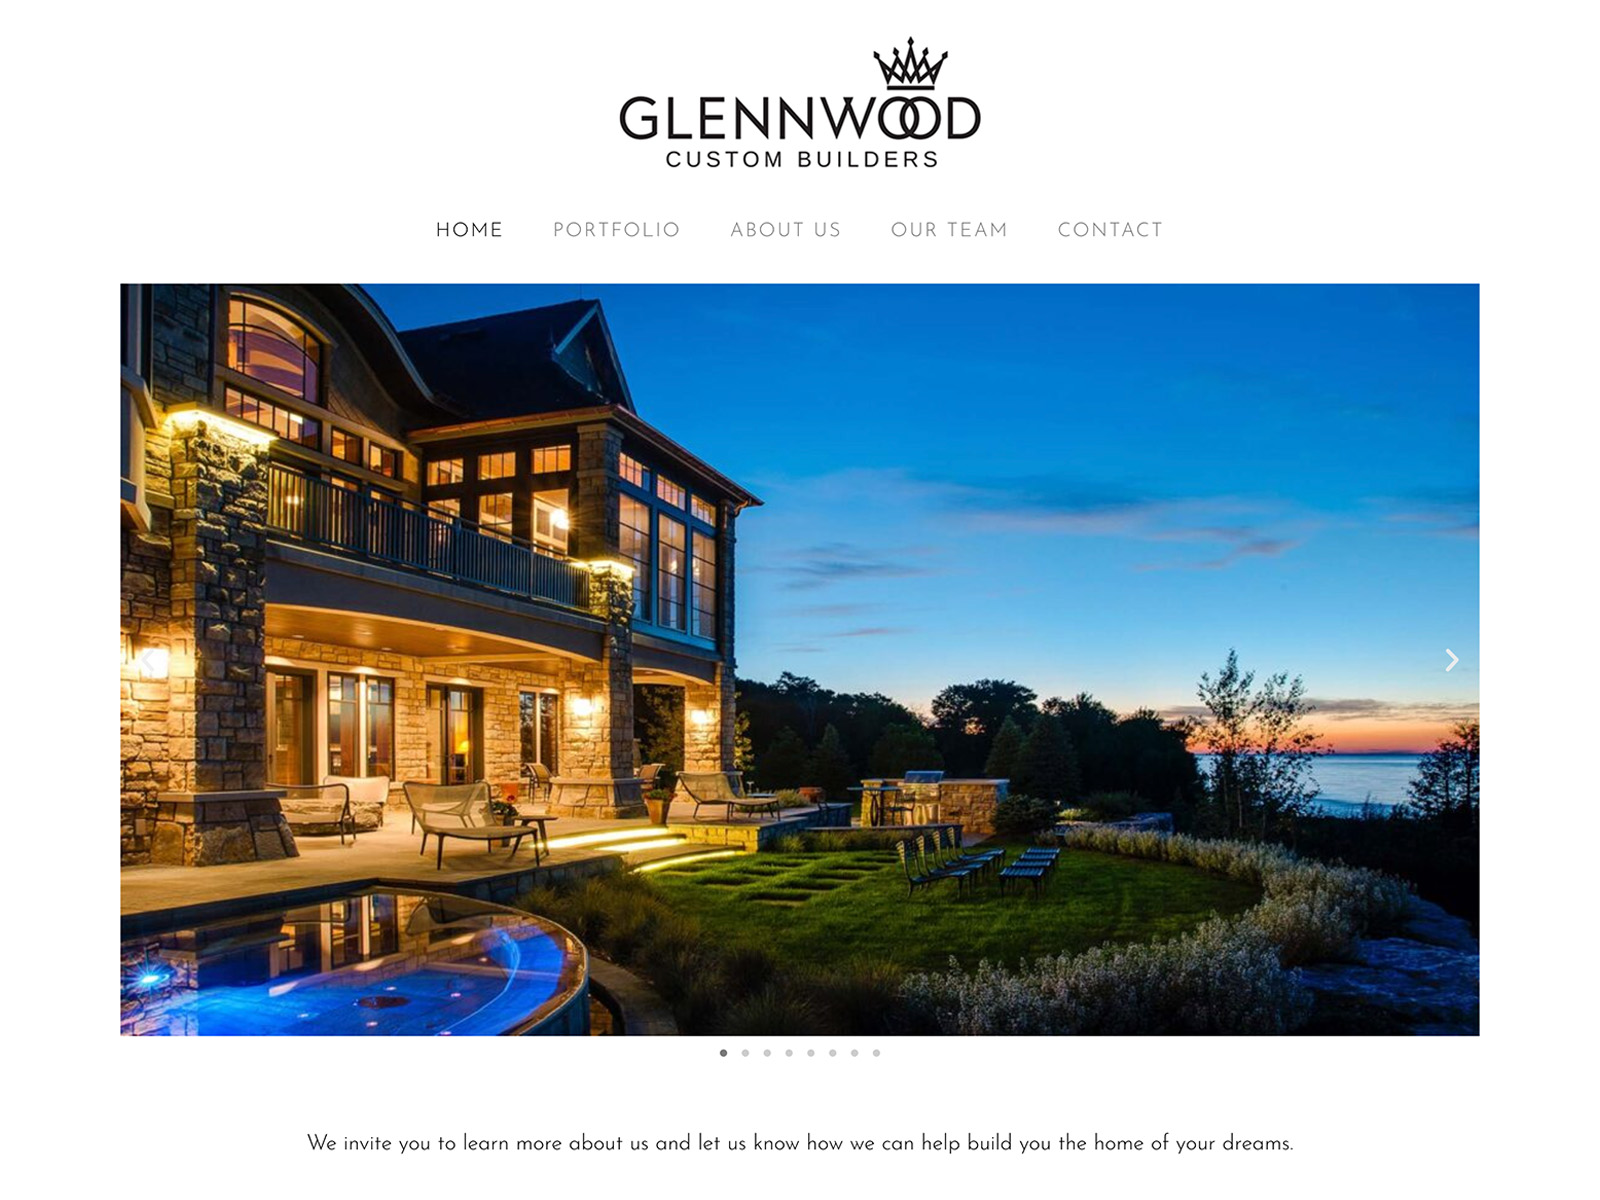 Gleenwood Custom Builders